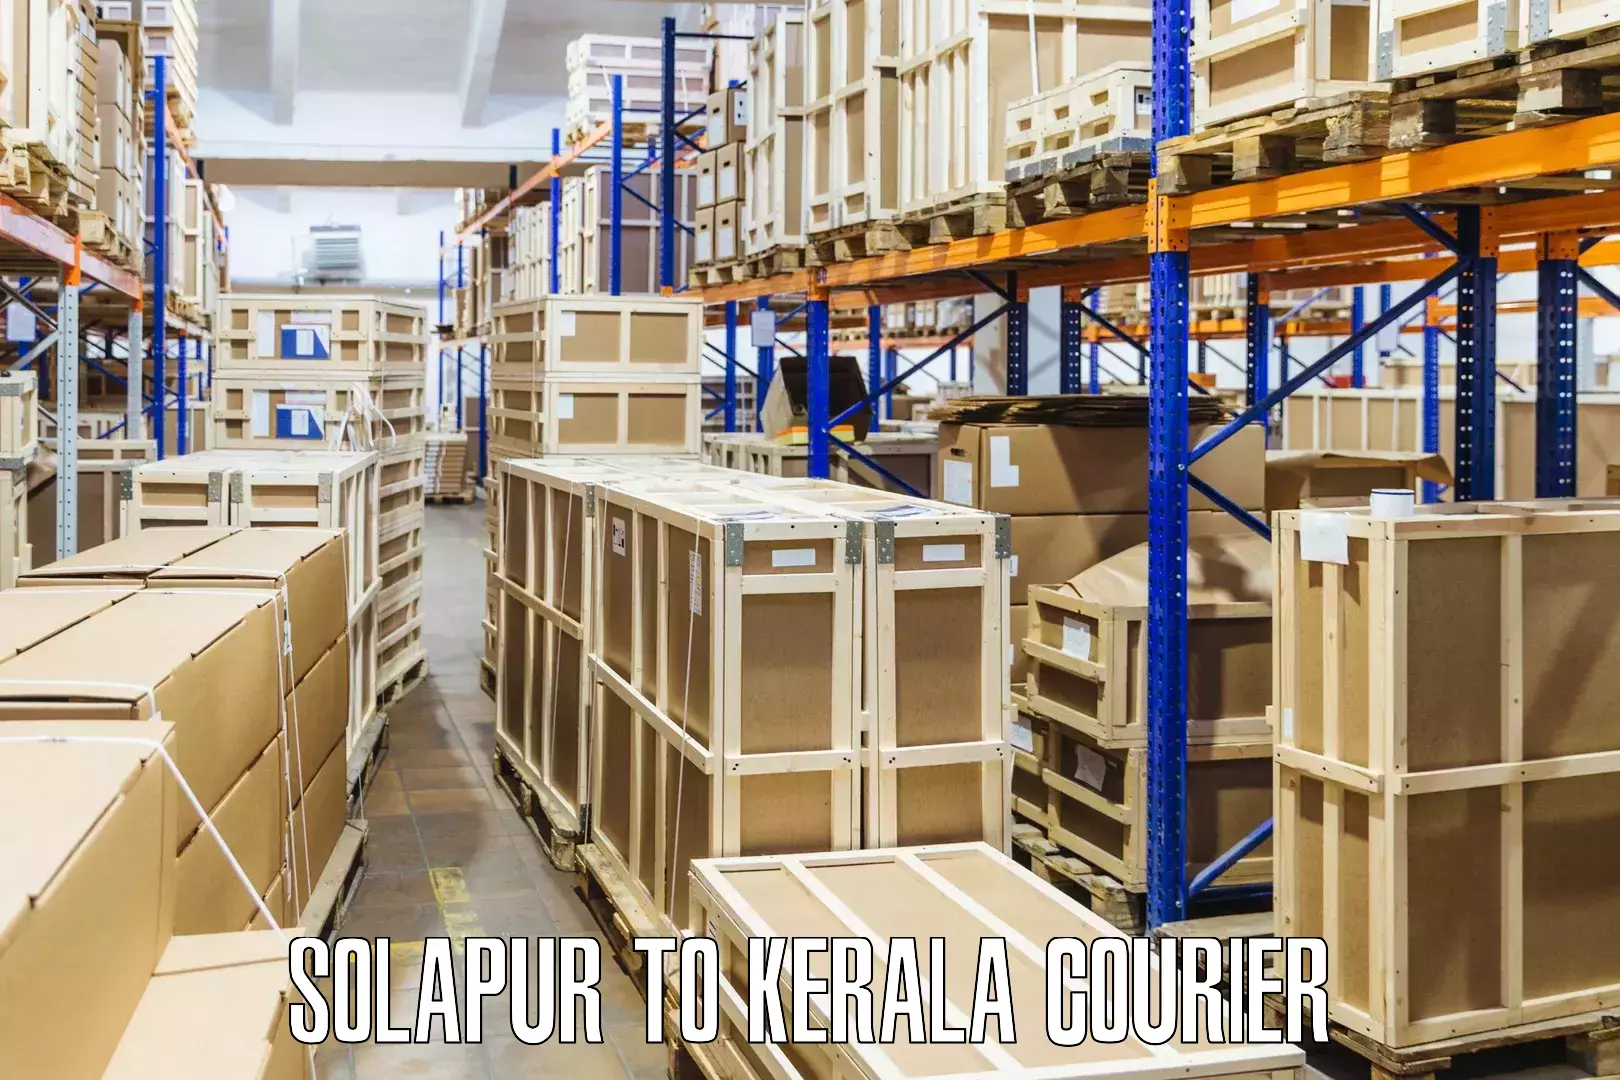 Digital shipping tools Solapur to Kerala